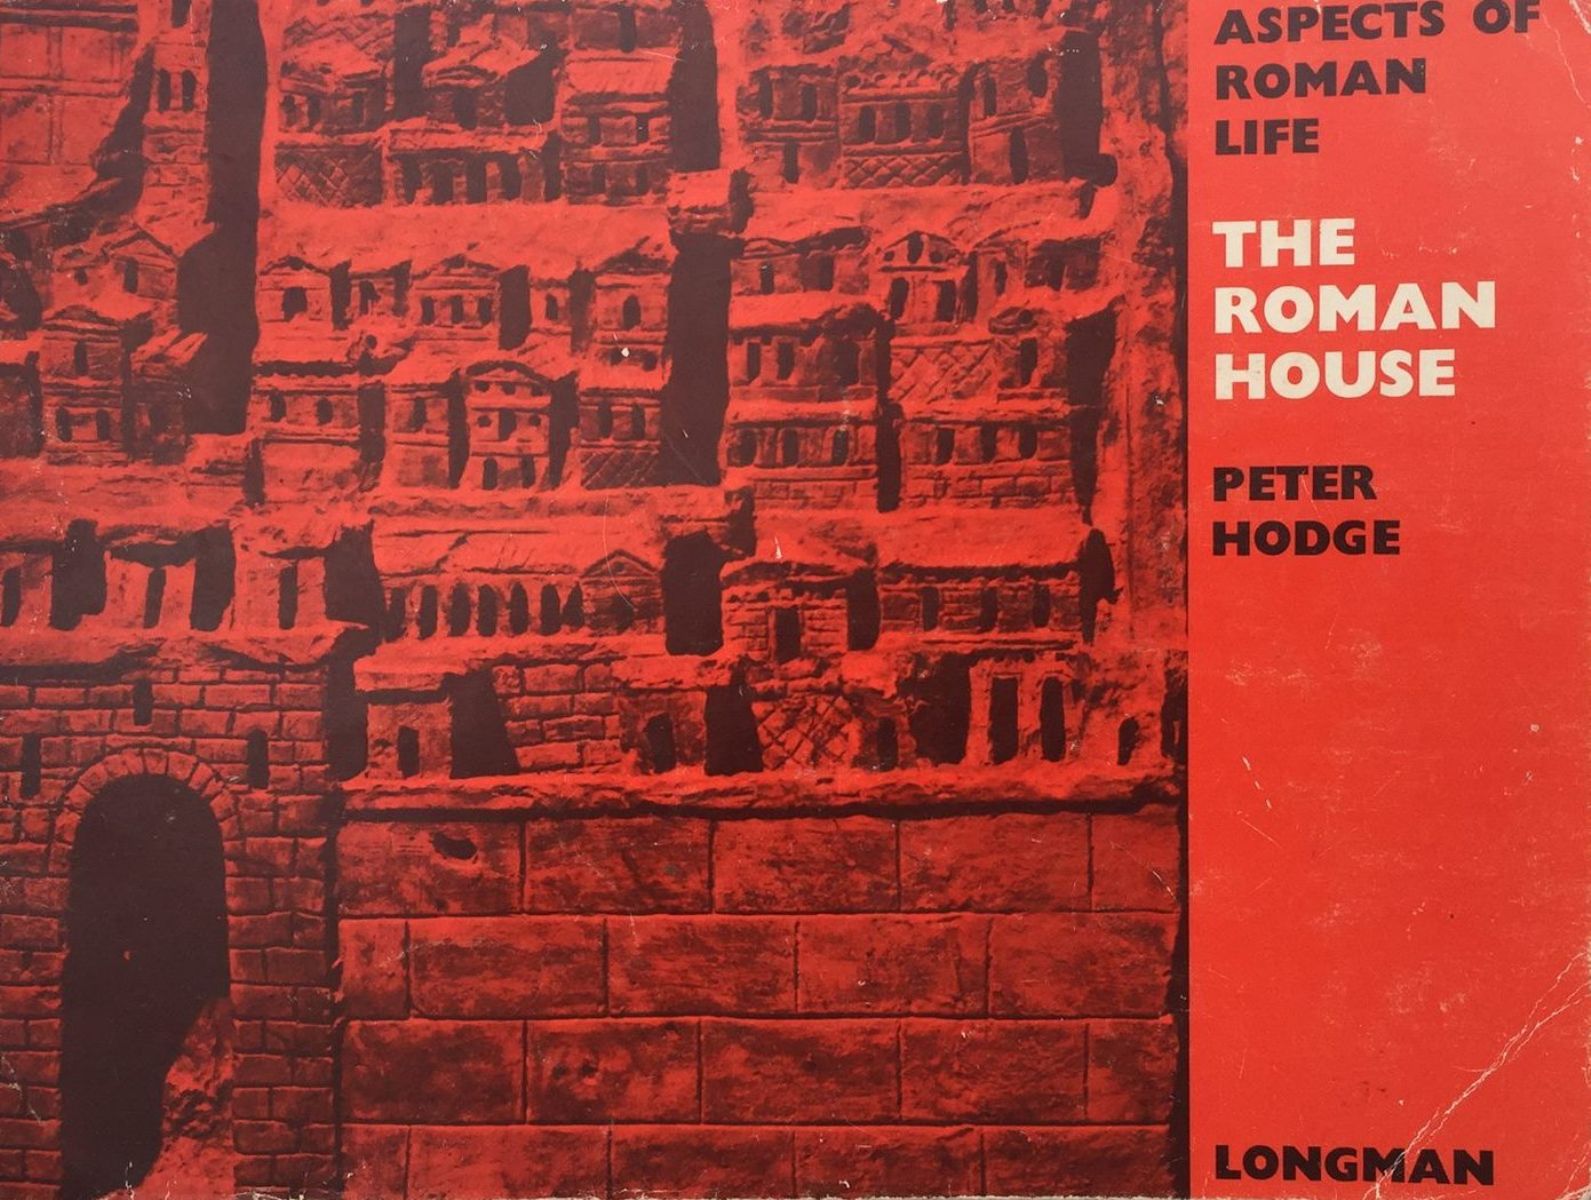 ASPECTS OF ROMAN LIFE: The Roman House